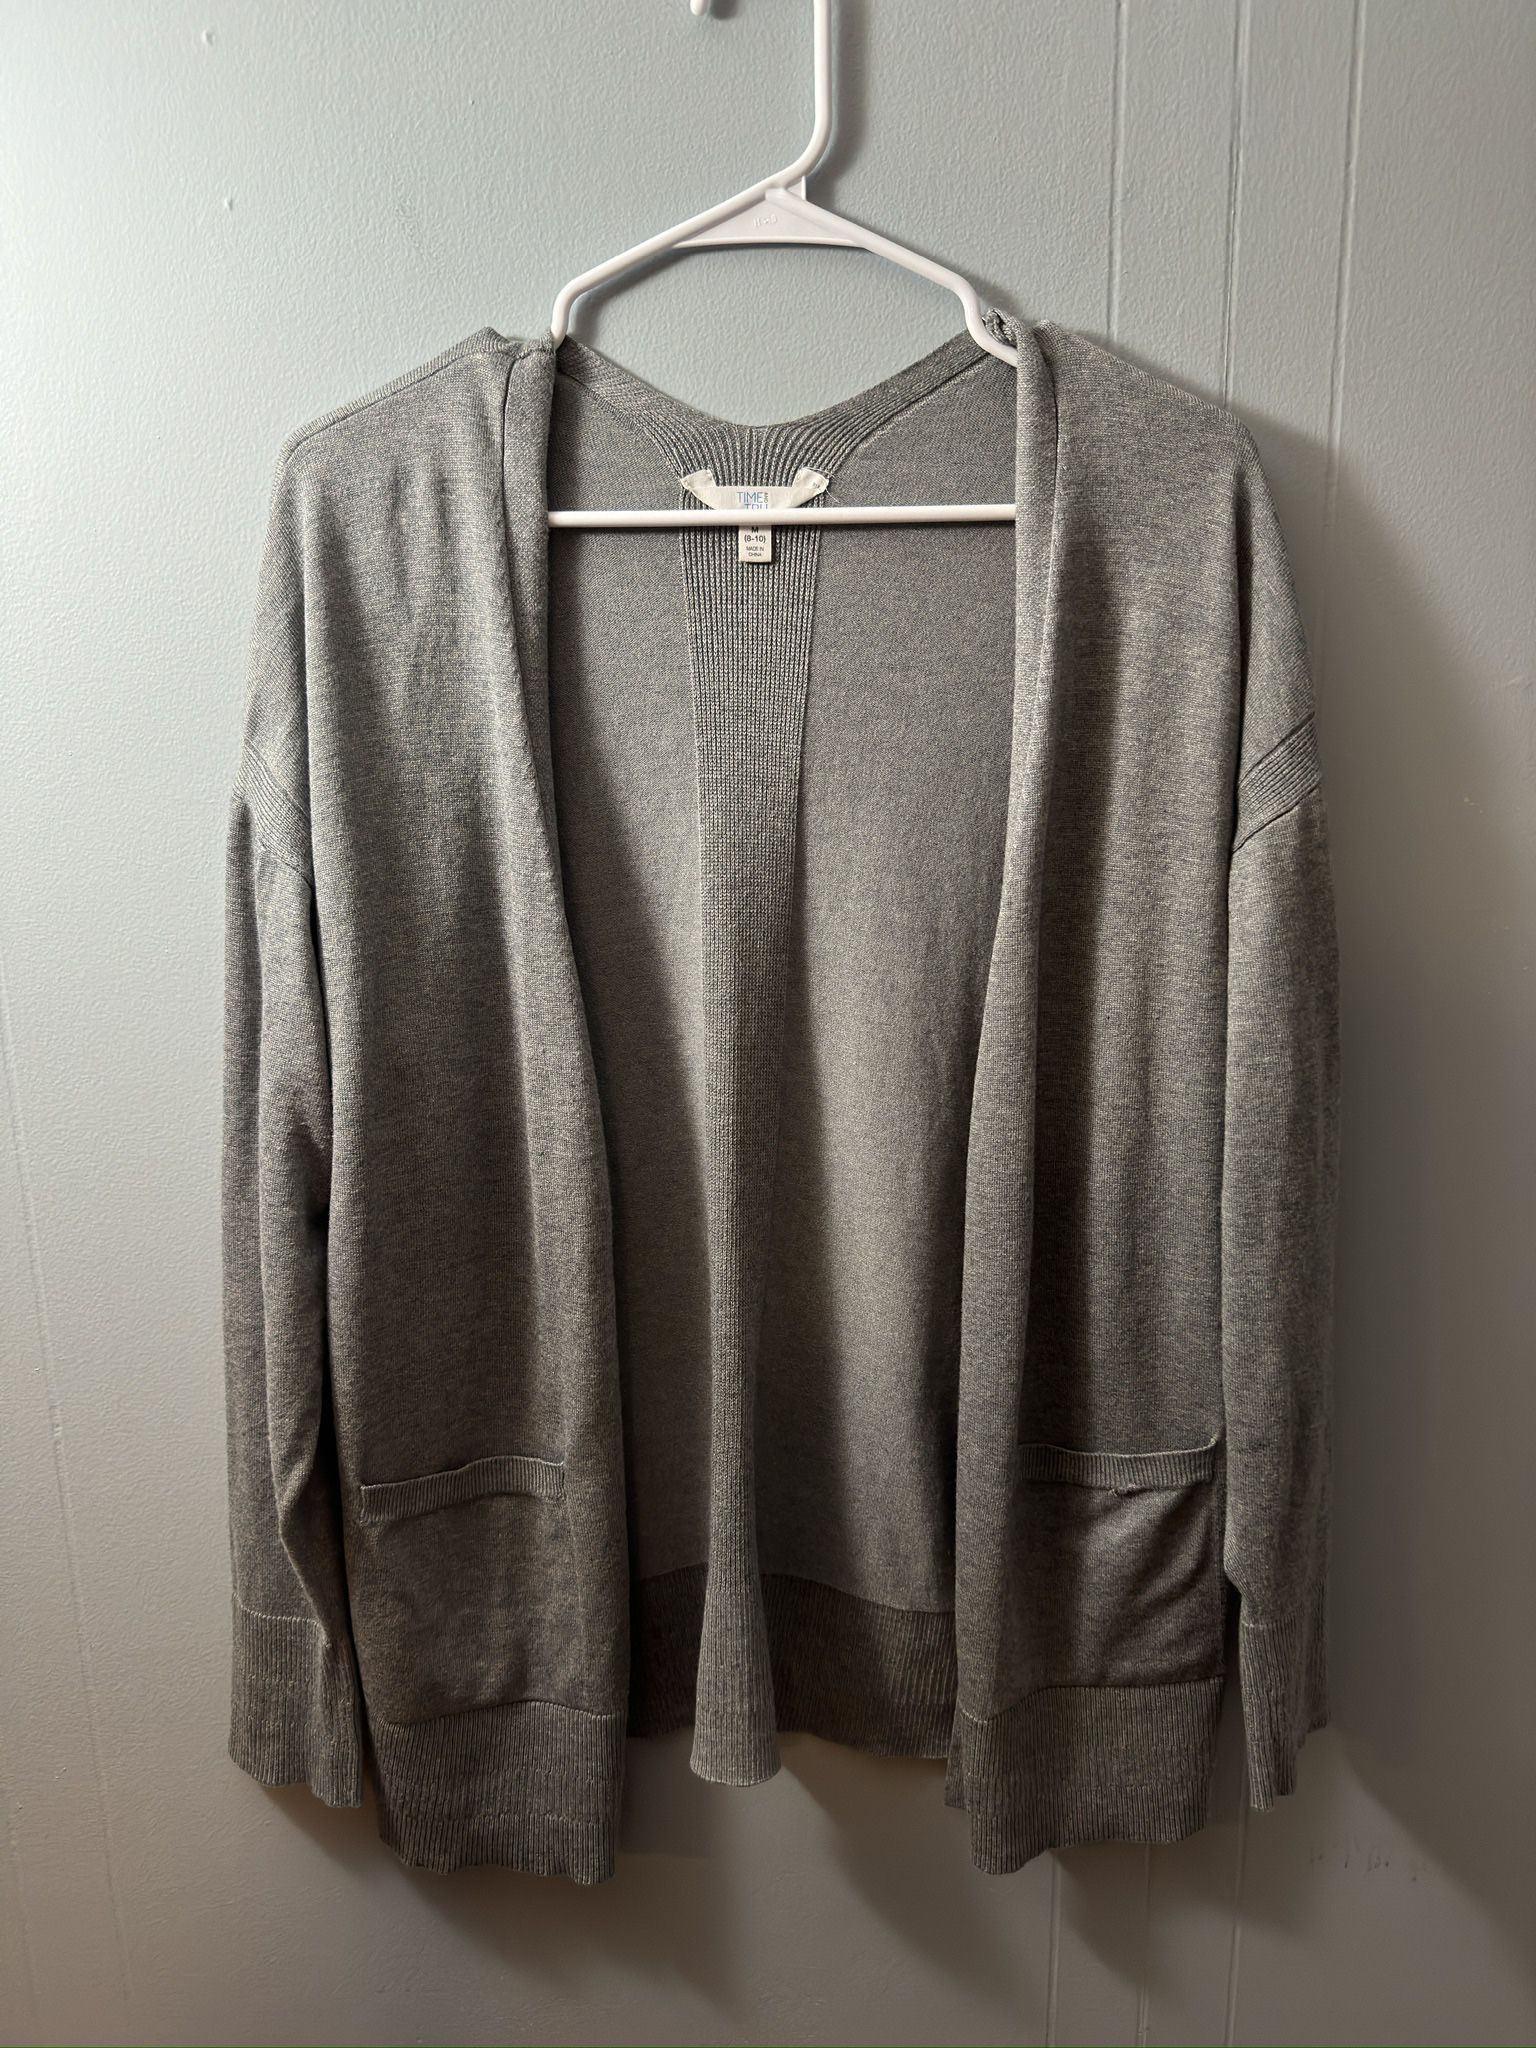 Women’s Time & Tru Gray Cardigan sweater. Size Medium. 